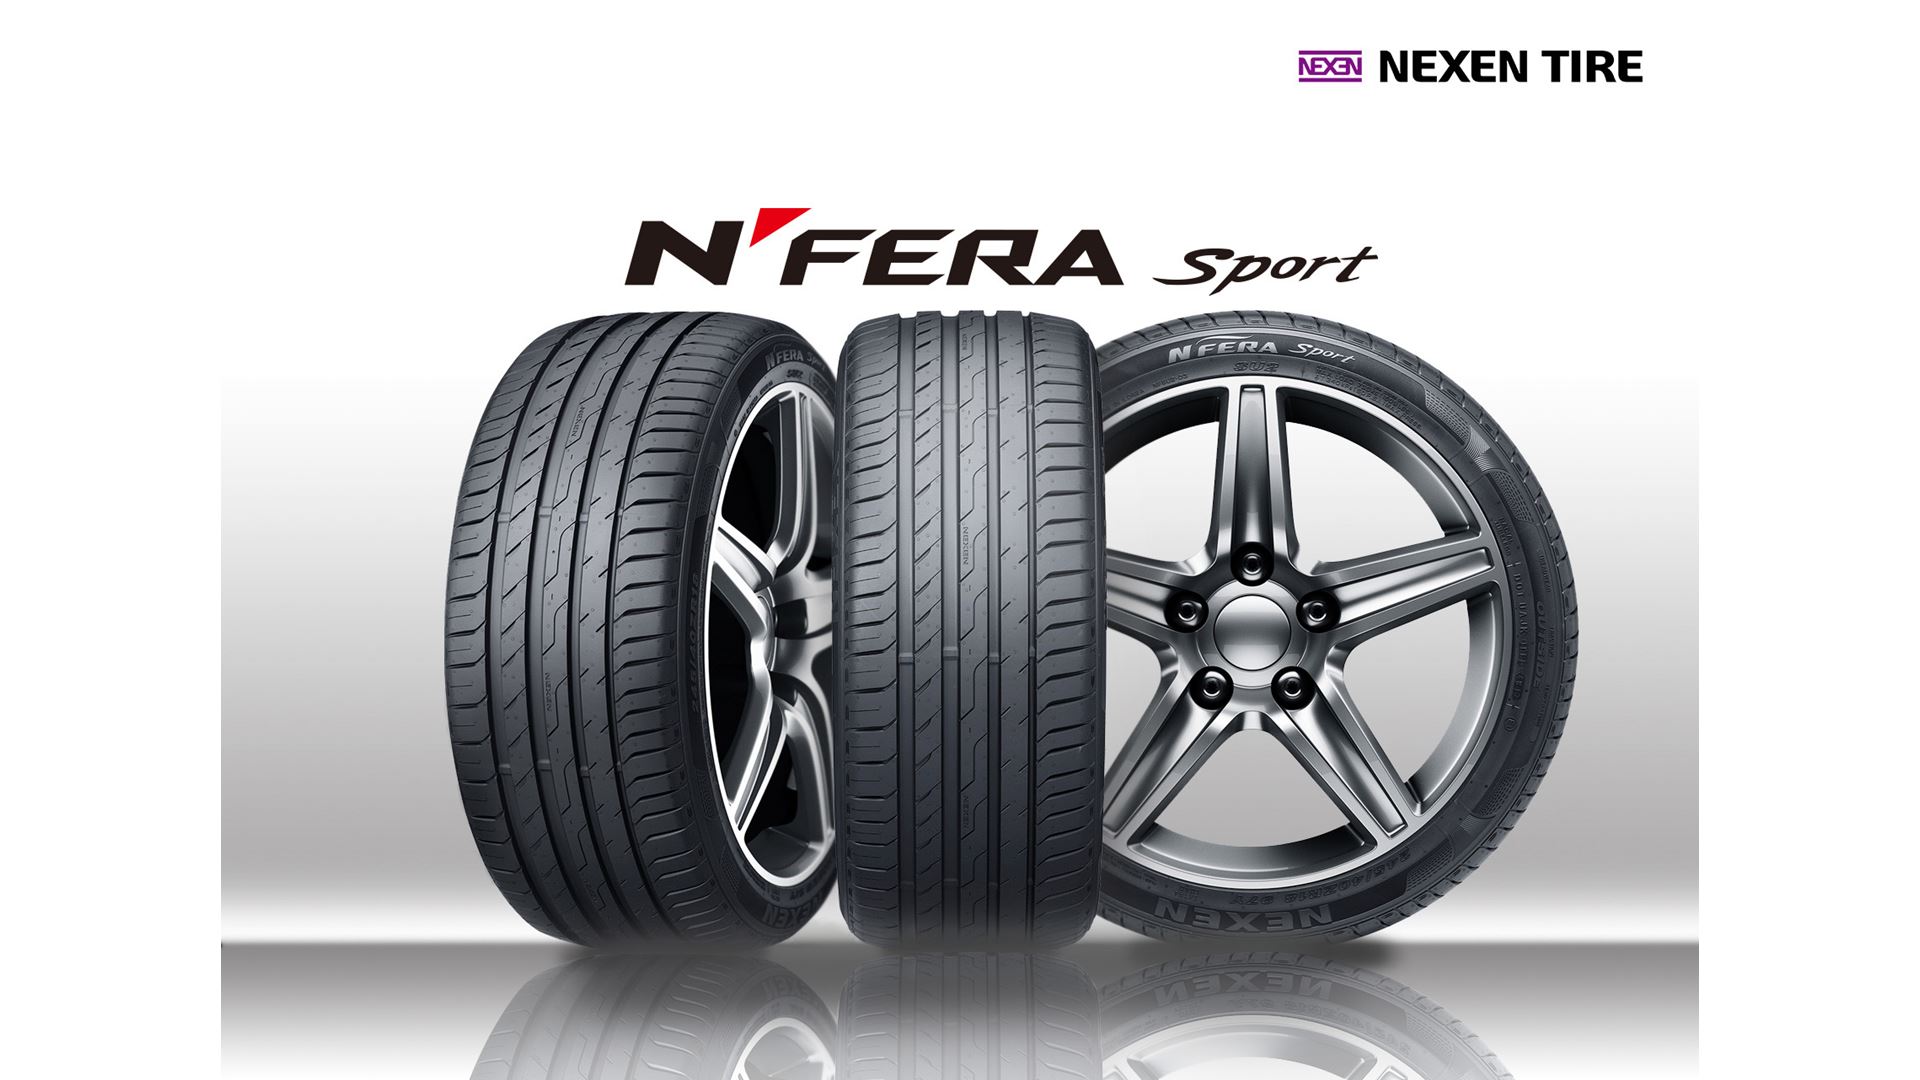 NEXEN Tire expands its original equipment portfolio line for premium quality N FERA SPORT tires